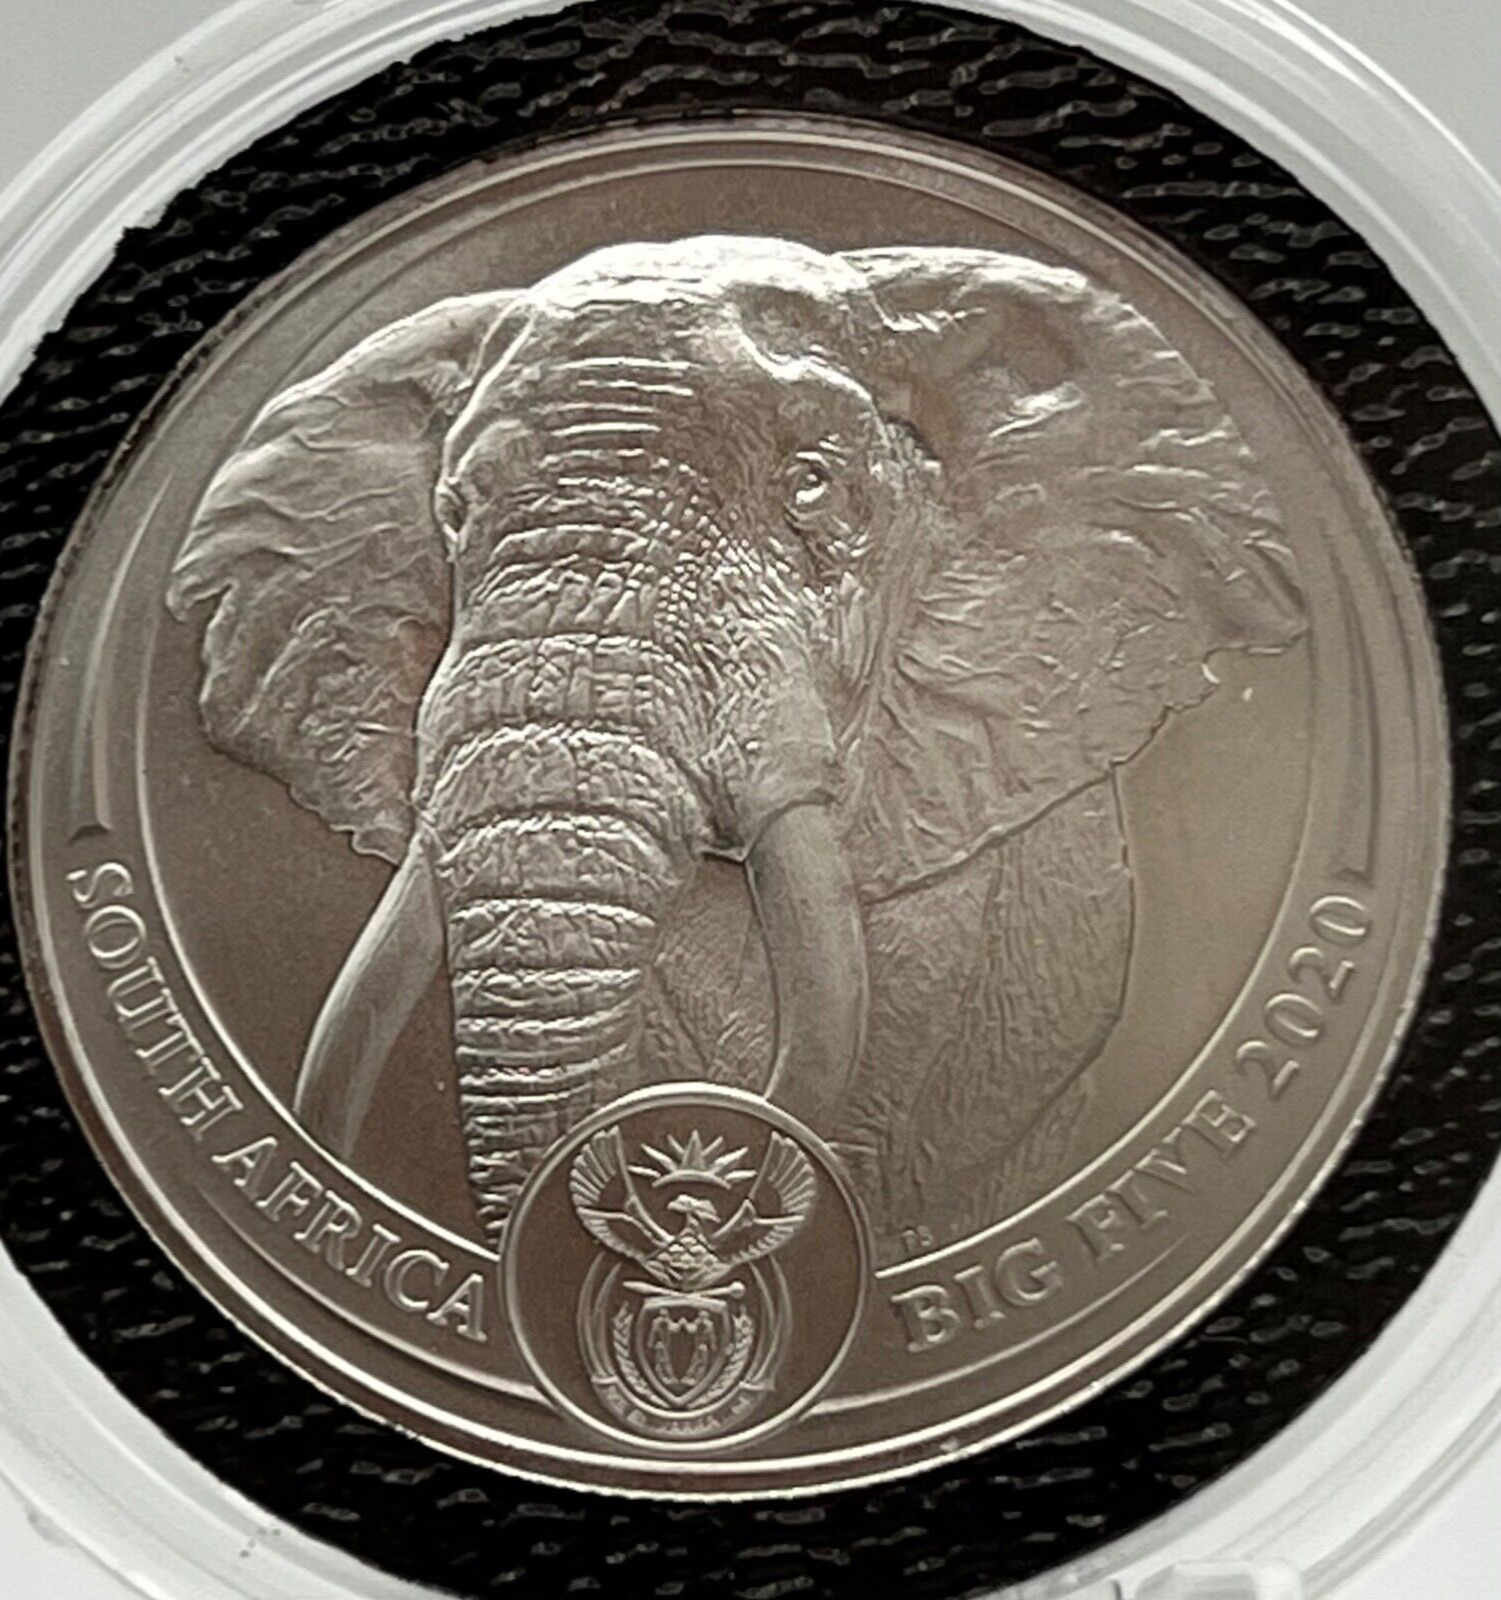 2020 South Africa 1 Oz. Platinum Big Five Elephant R20 Brilliant Uncirculated